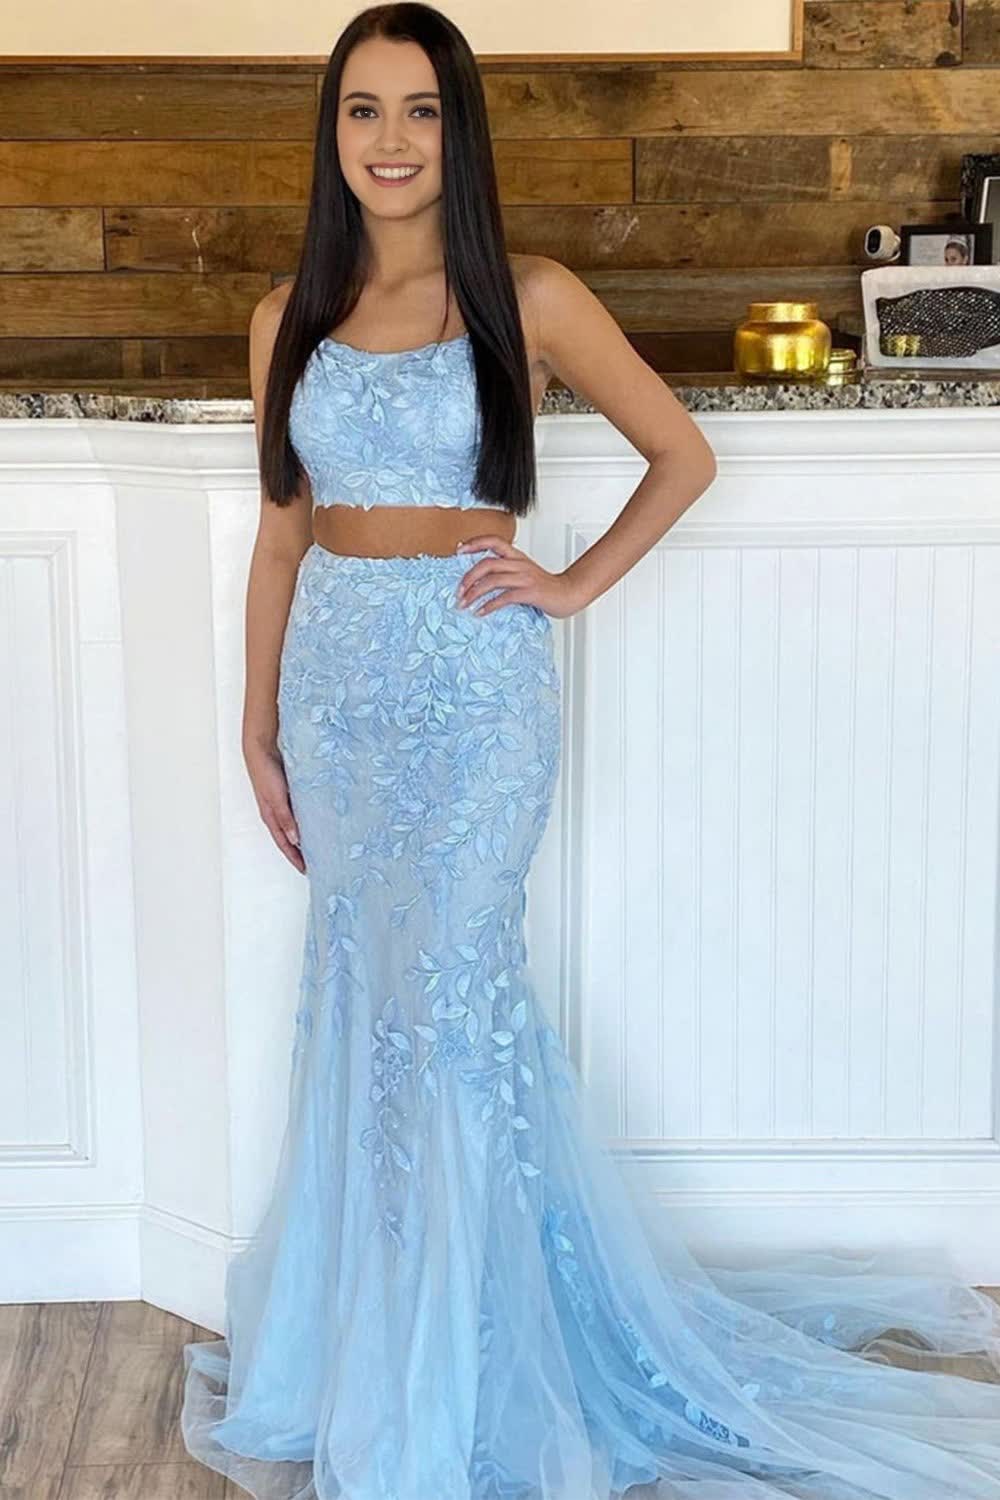 Two Piece Mermaid Blue Prom Dress